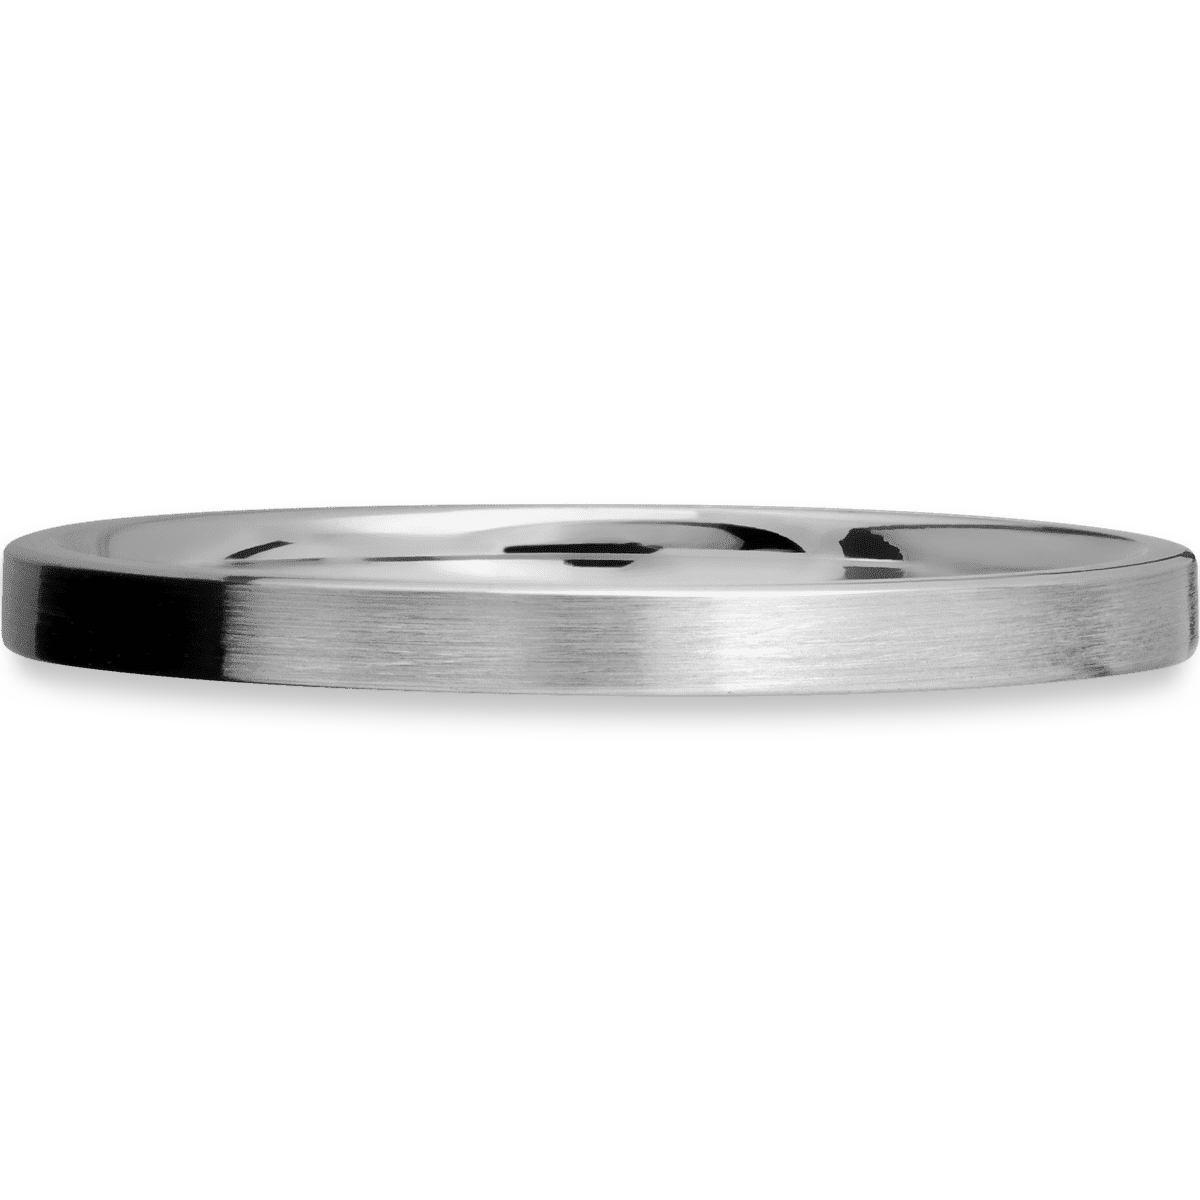 2mm wide flat titanium band with satin finish.